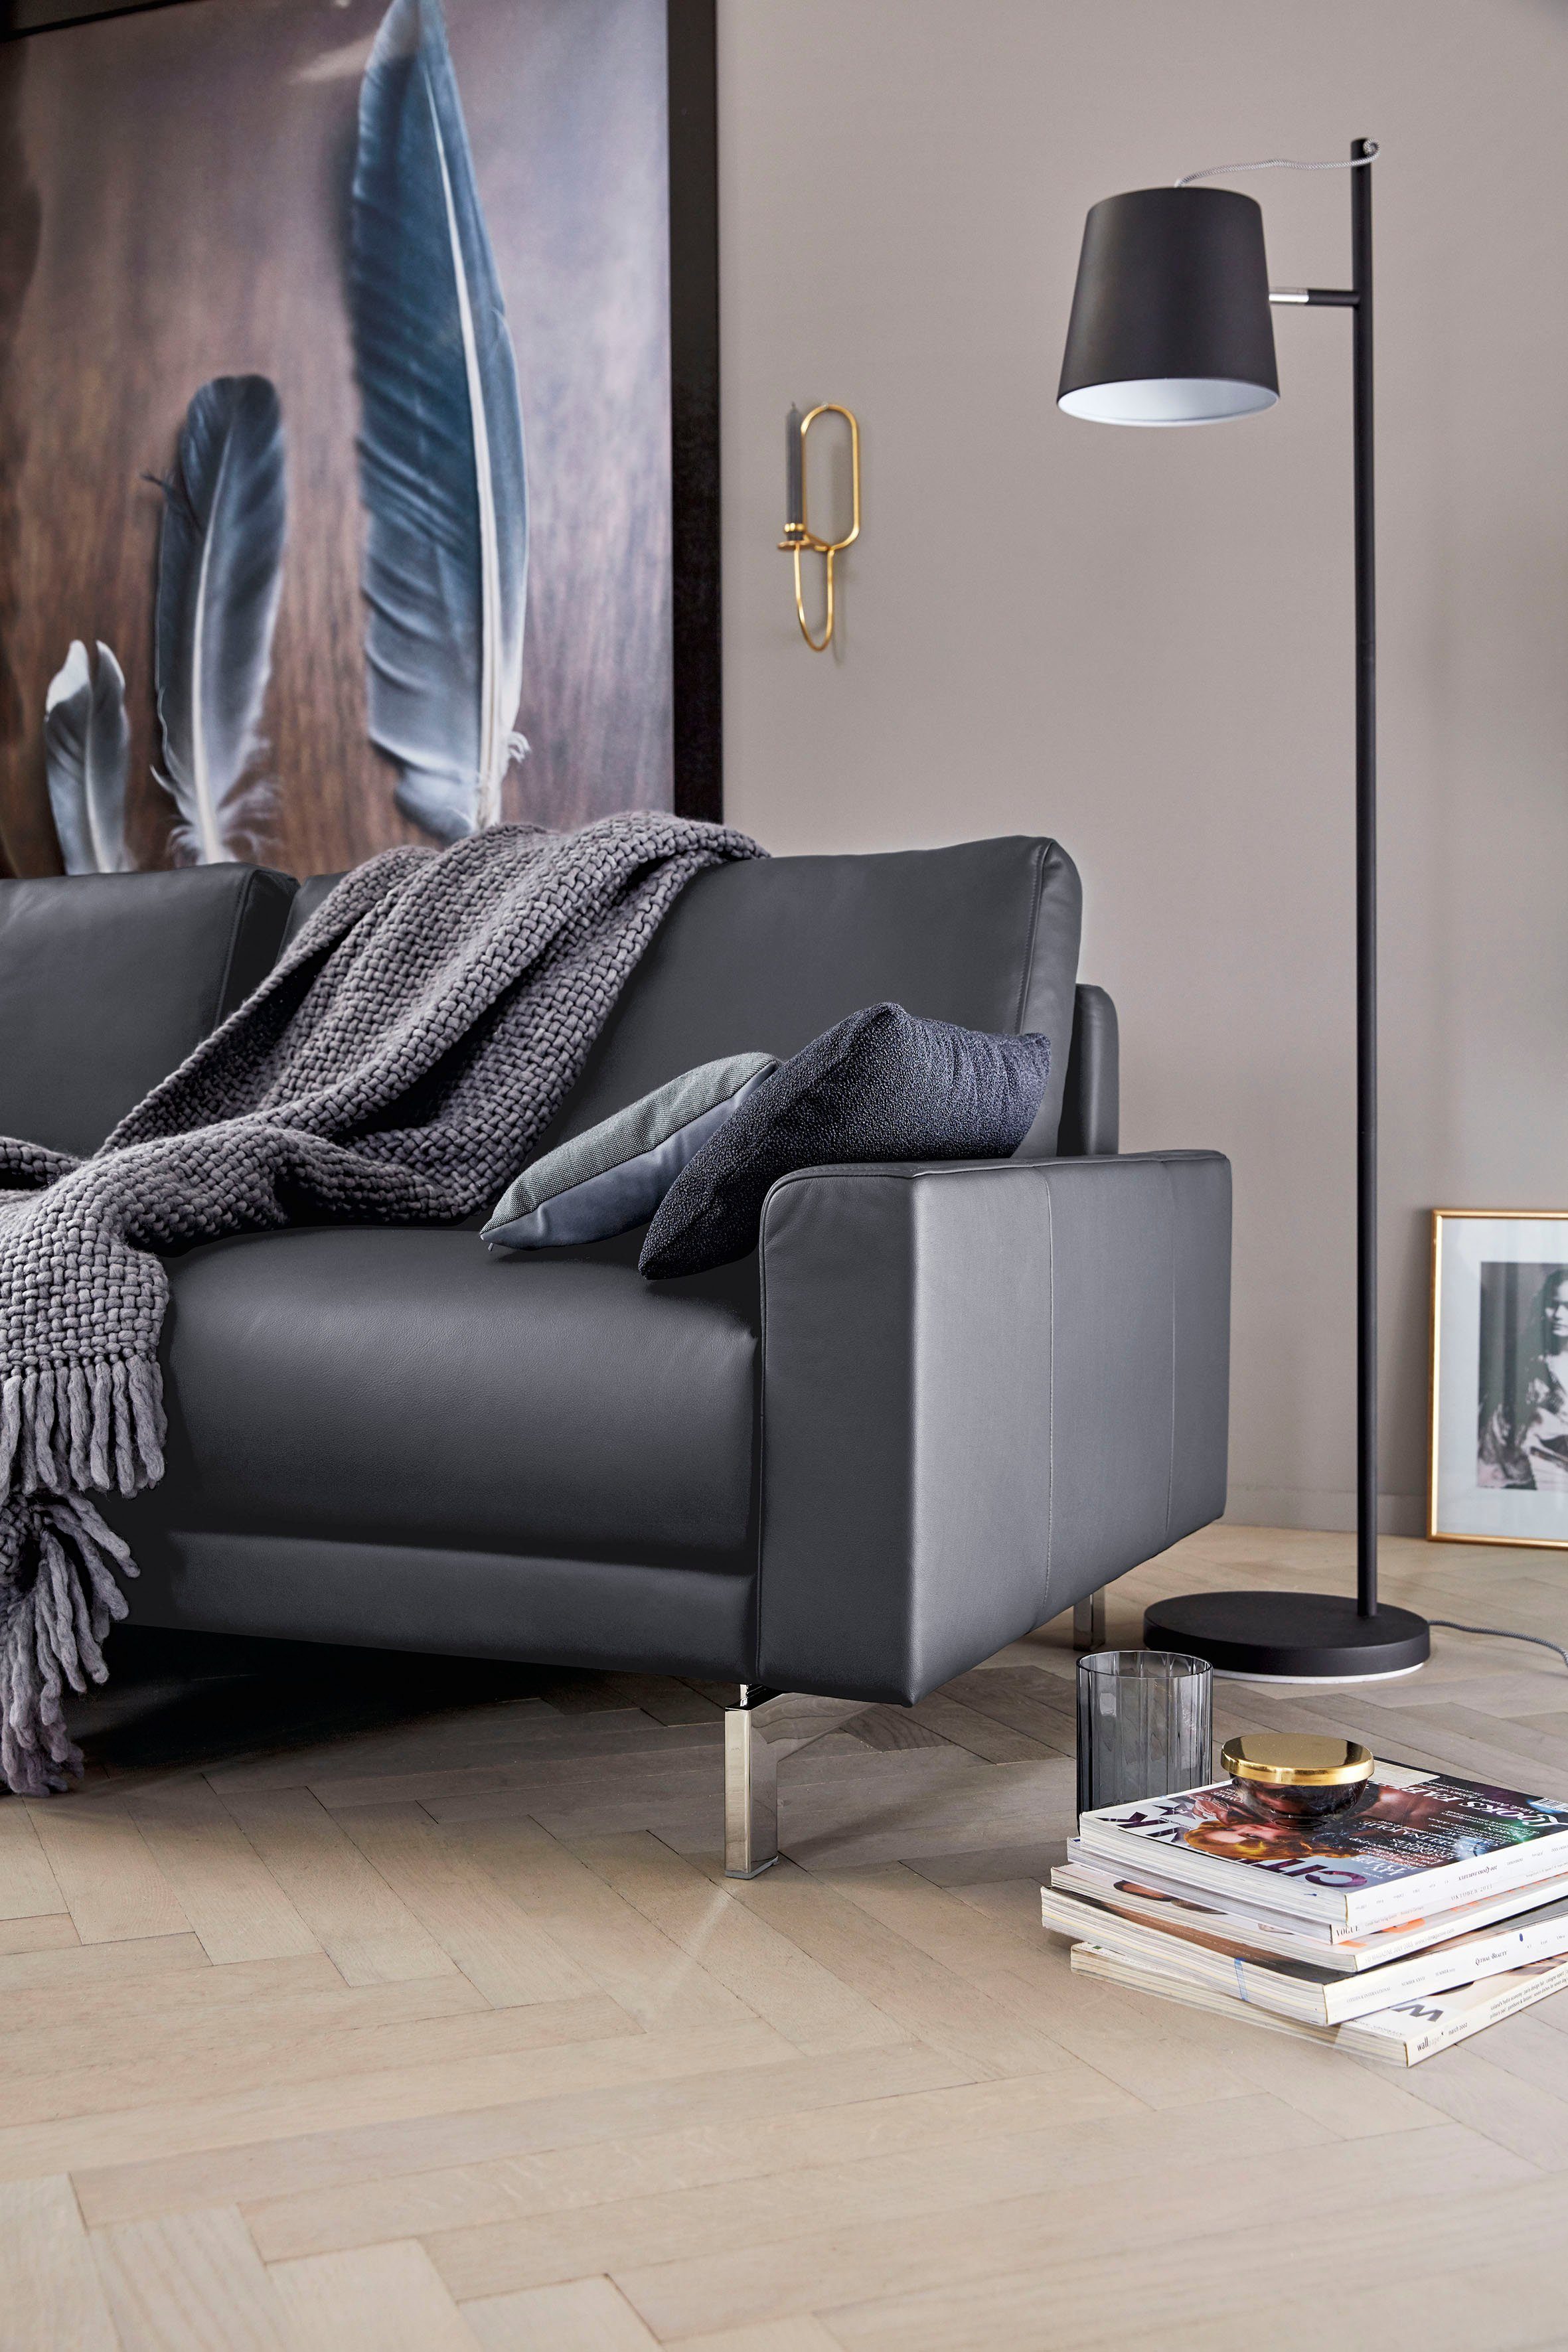 Armlehne niedrig, 2-Sitzer hülsta sofa chromfarben cm glänzend, 164 hs.450, Breite Fuß